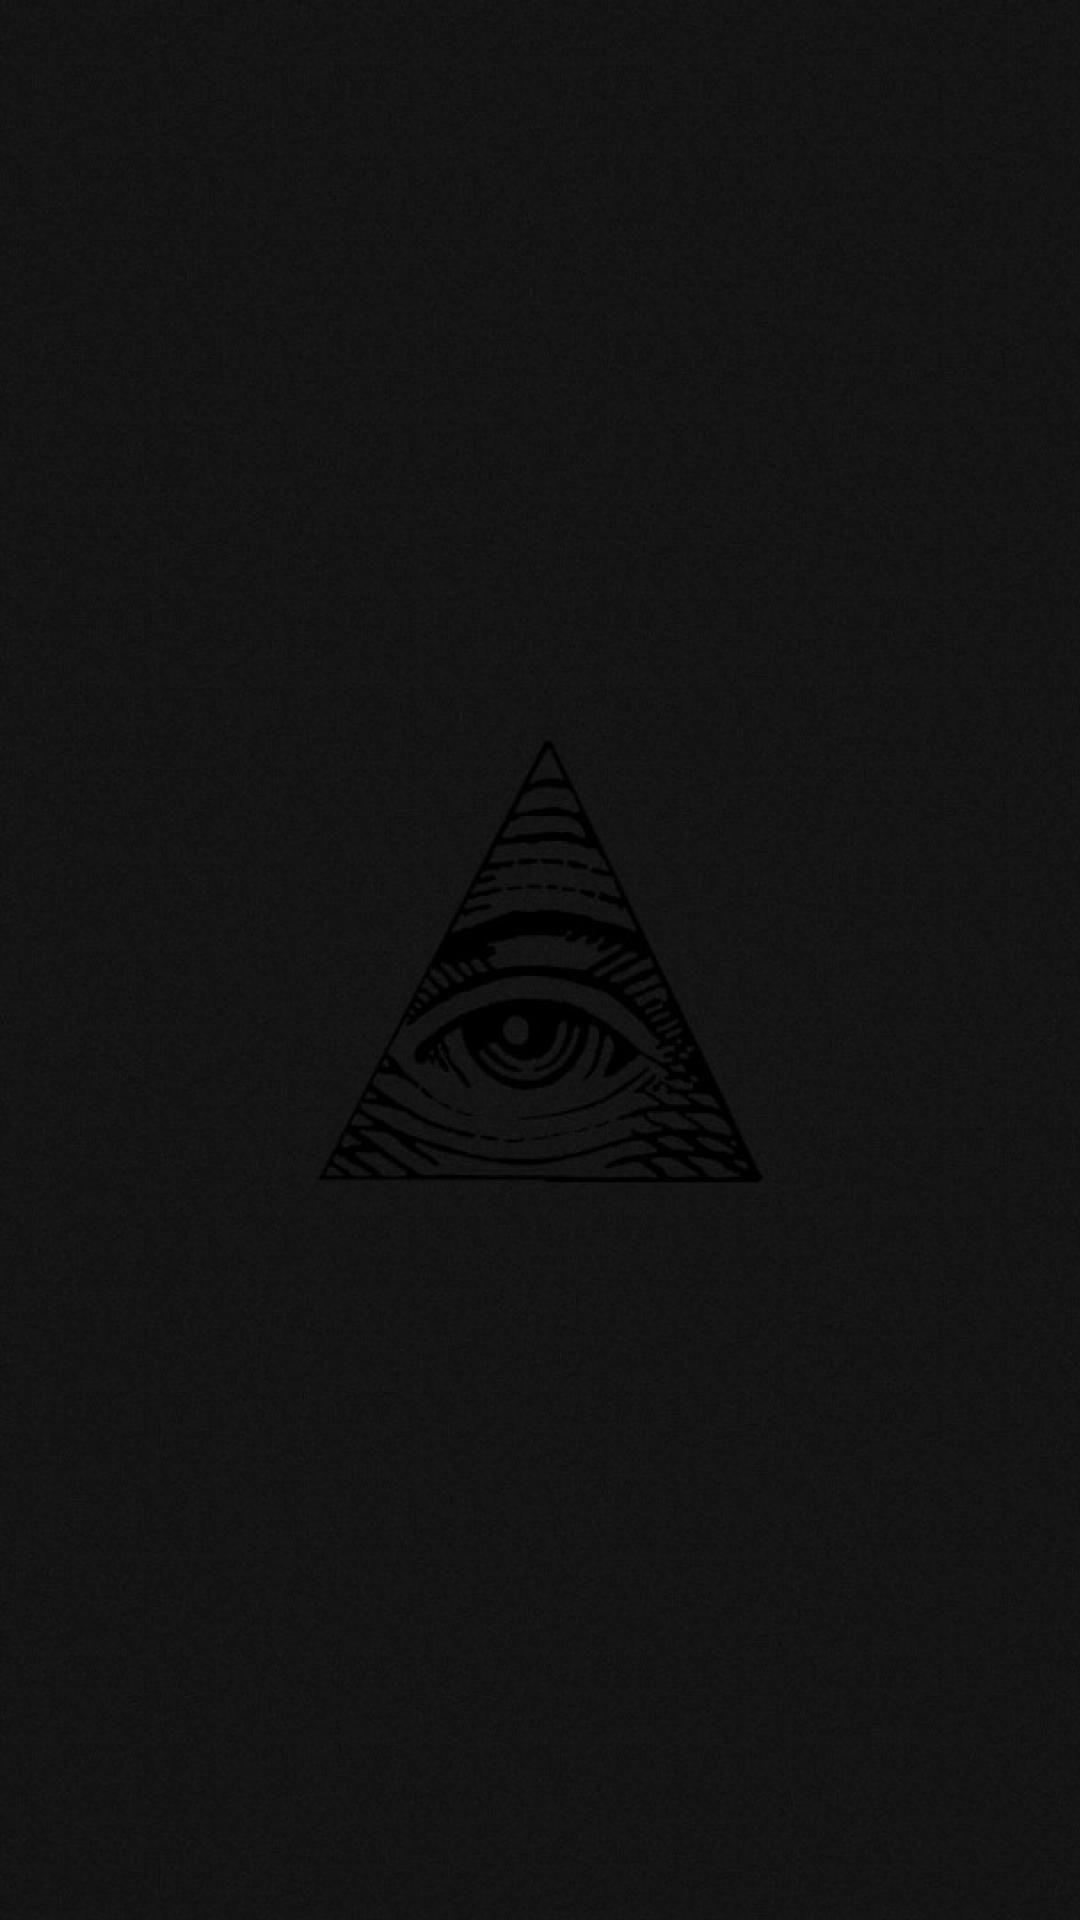 Illuminati Eye Triangle Wallpaper Free Illuminati Eye